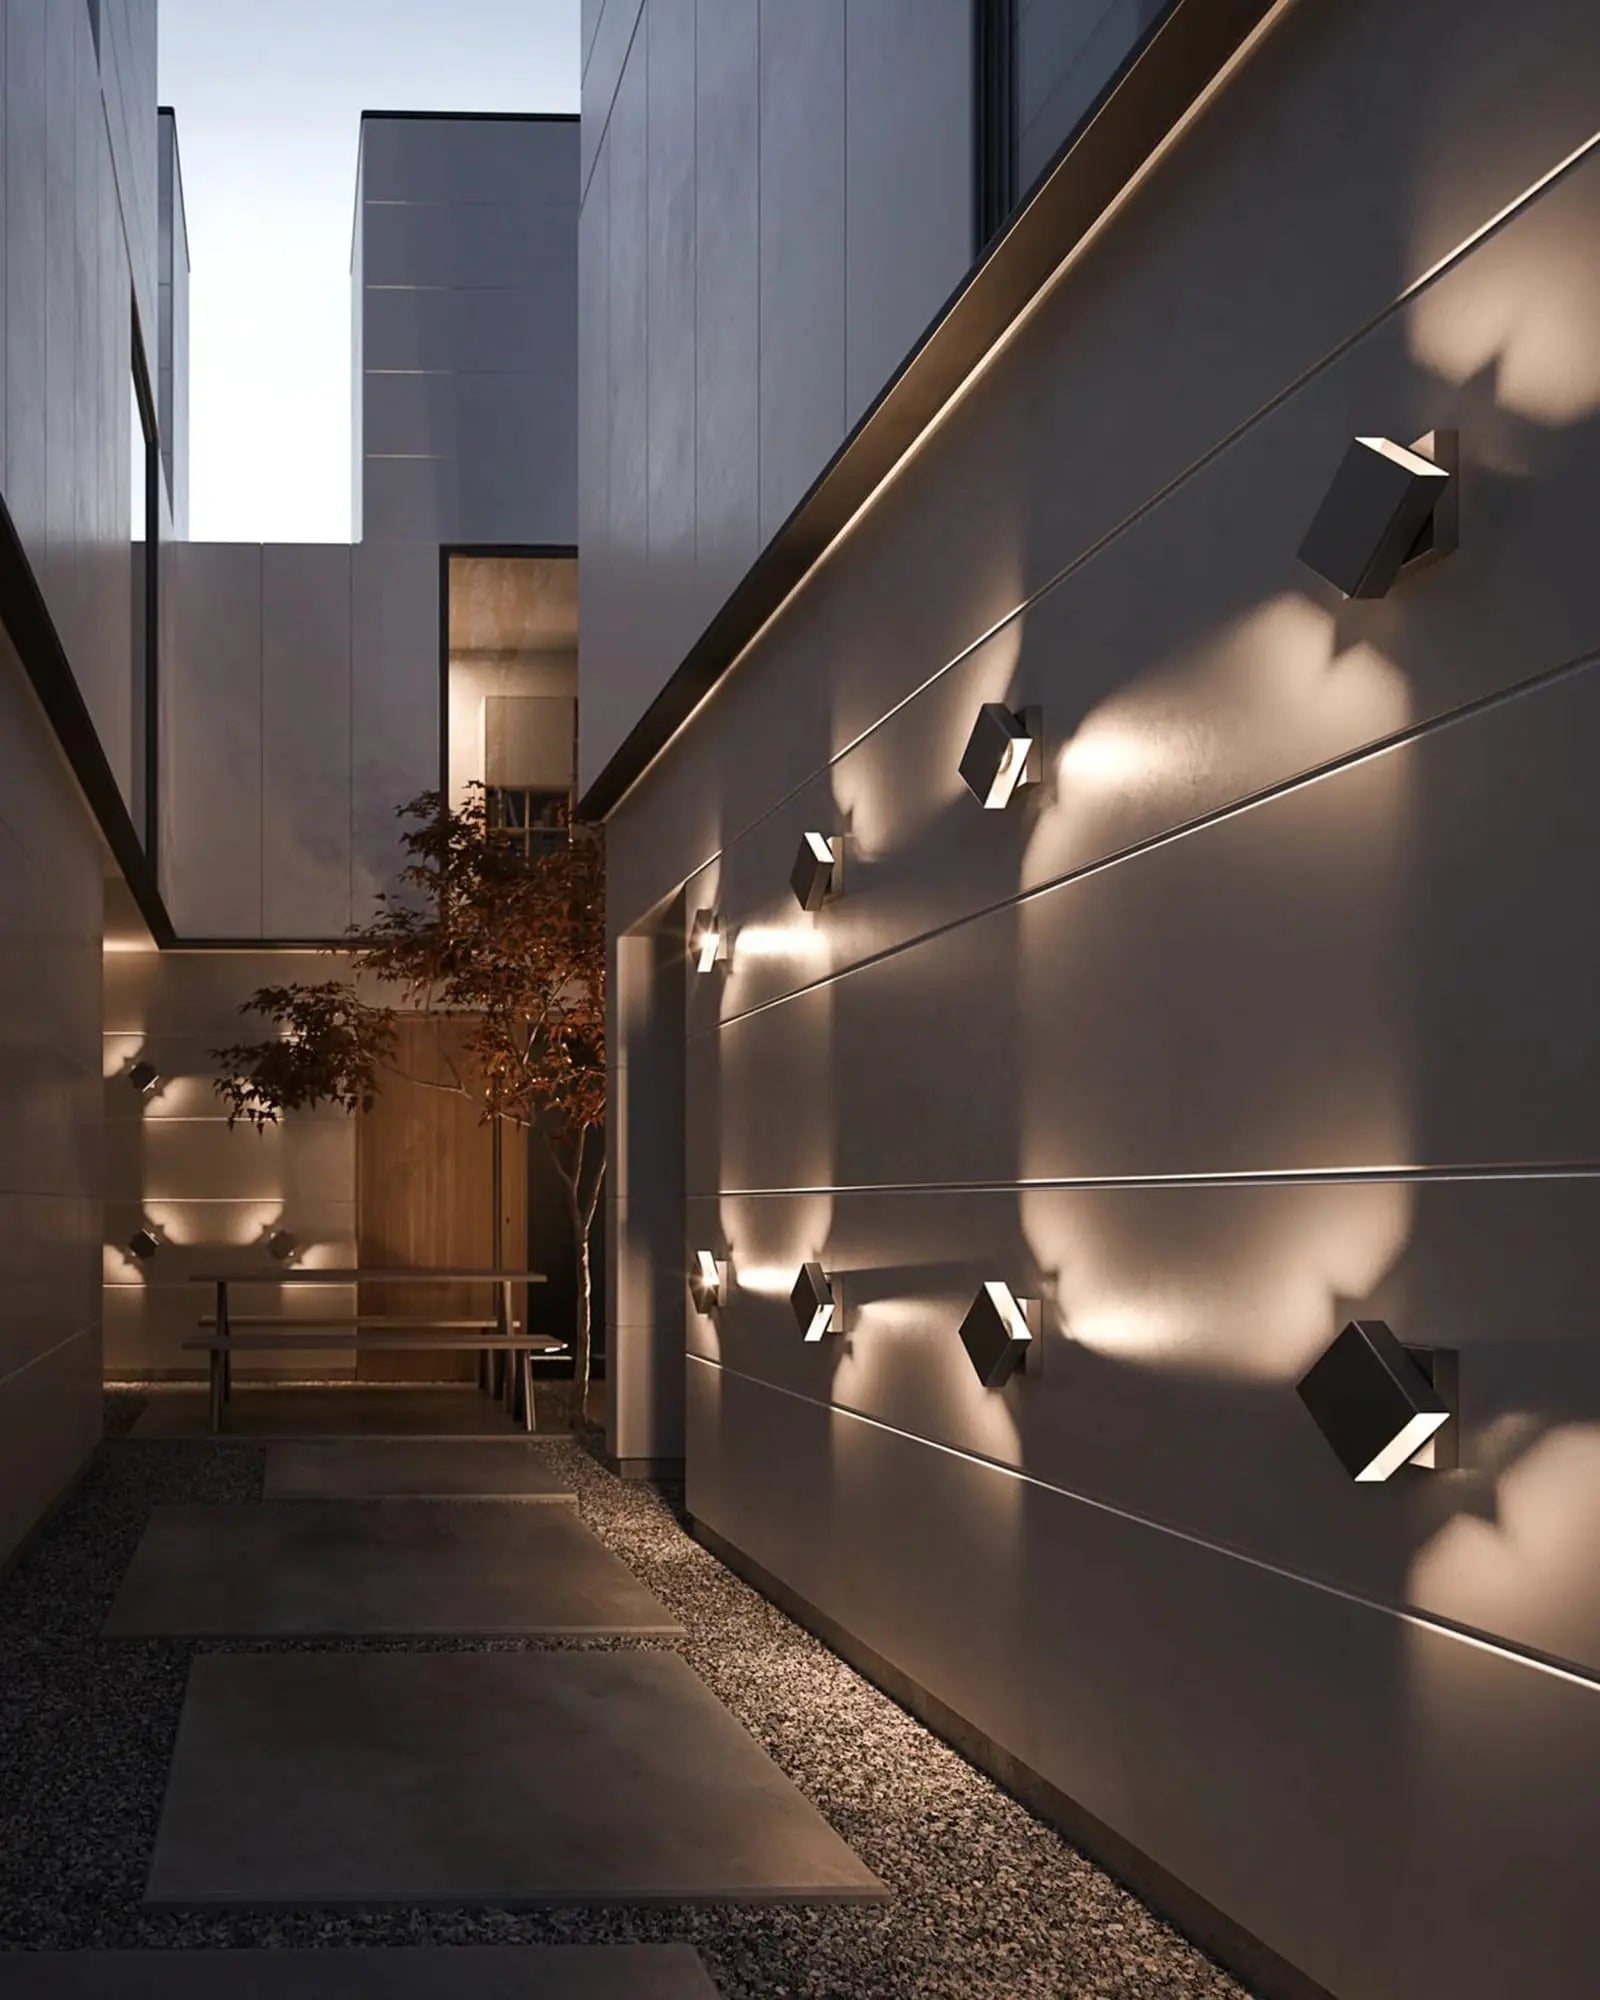 Turn Scandinavian adjustable rectangular wall light cluster on exterior wall